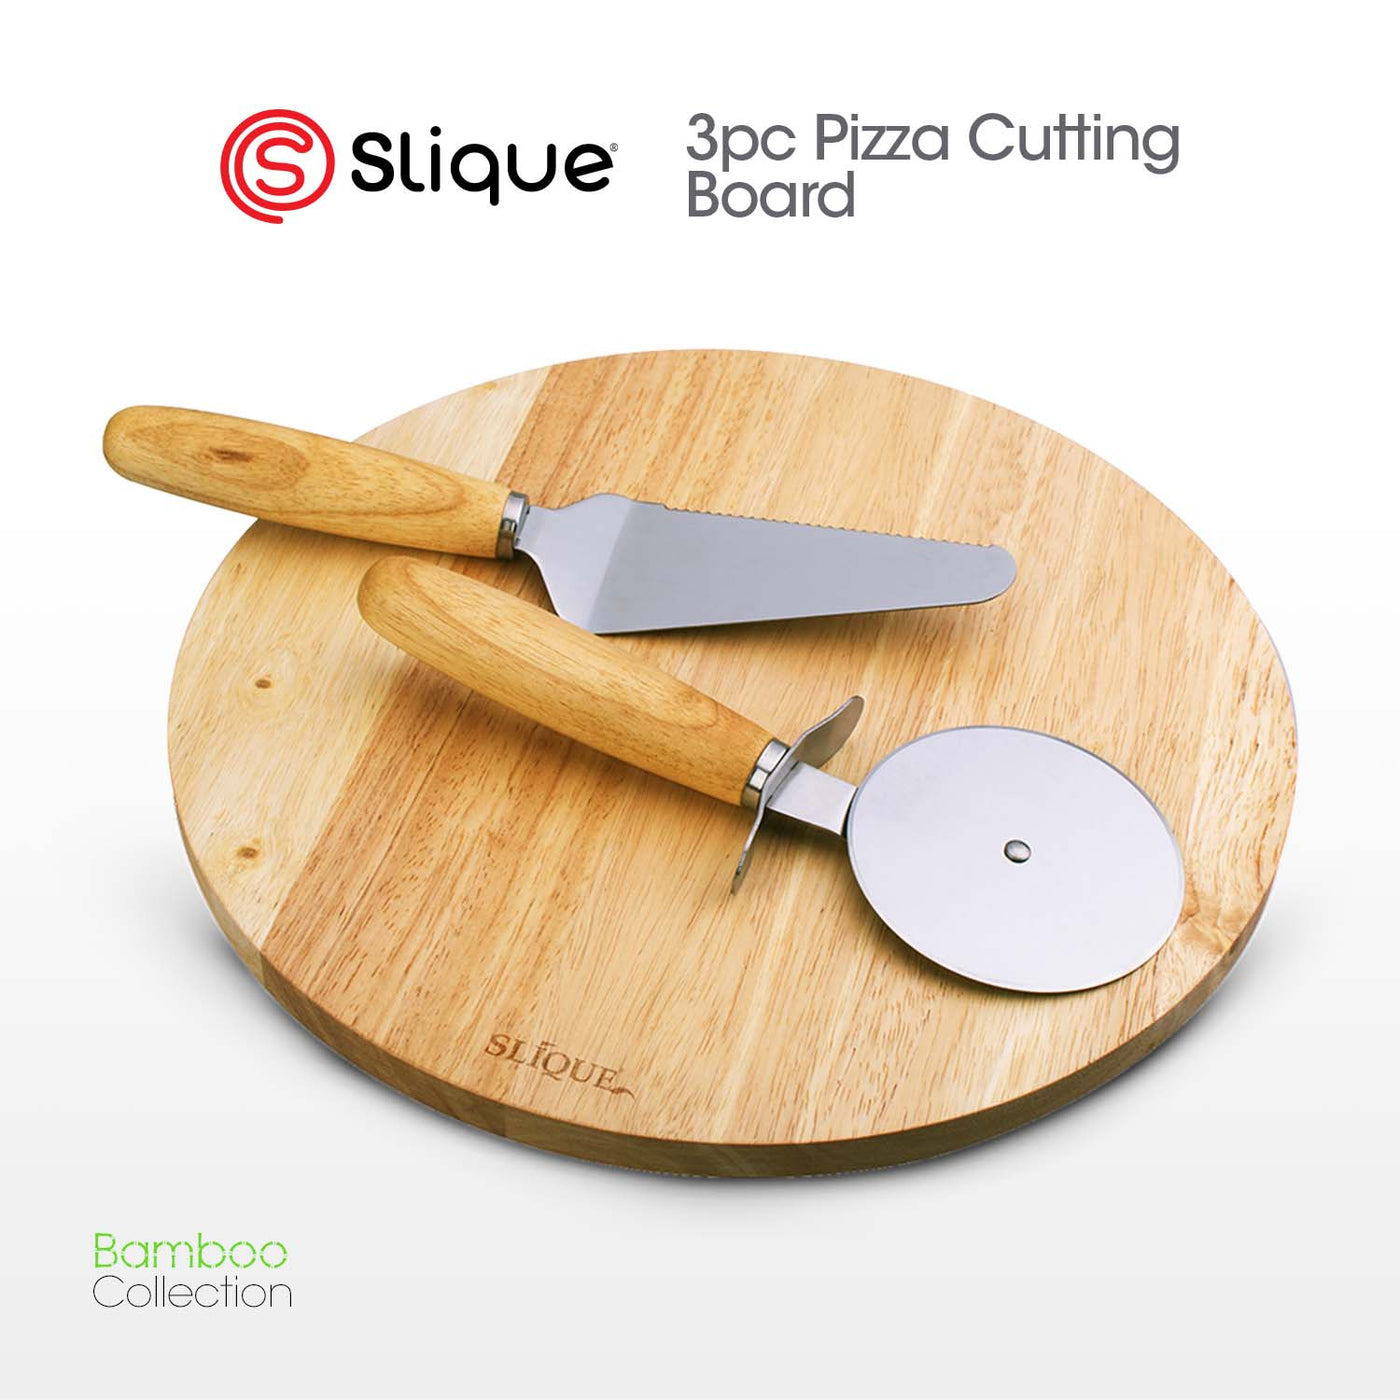 SLIQUE Premium Pizza cutting board 3pcs